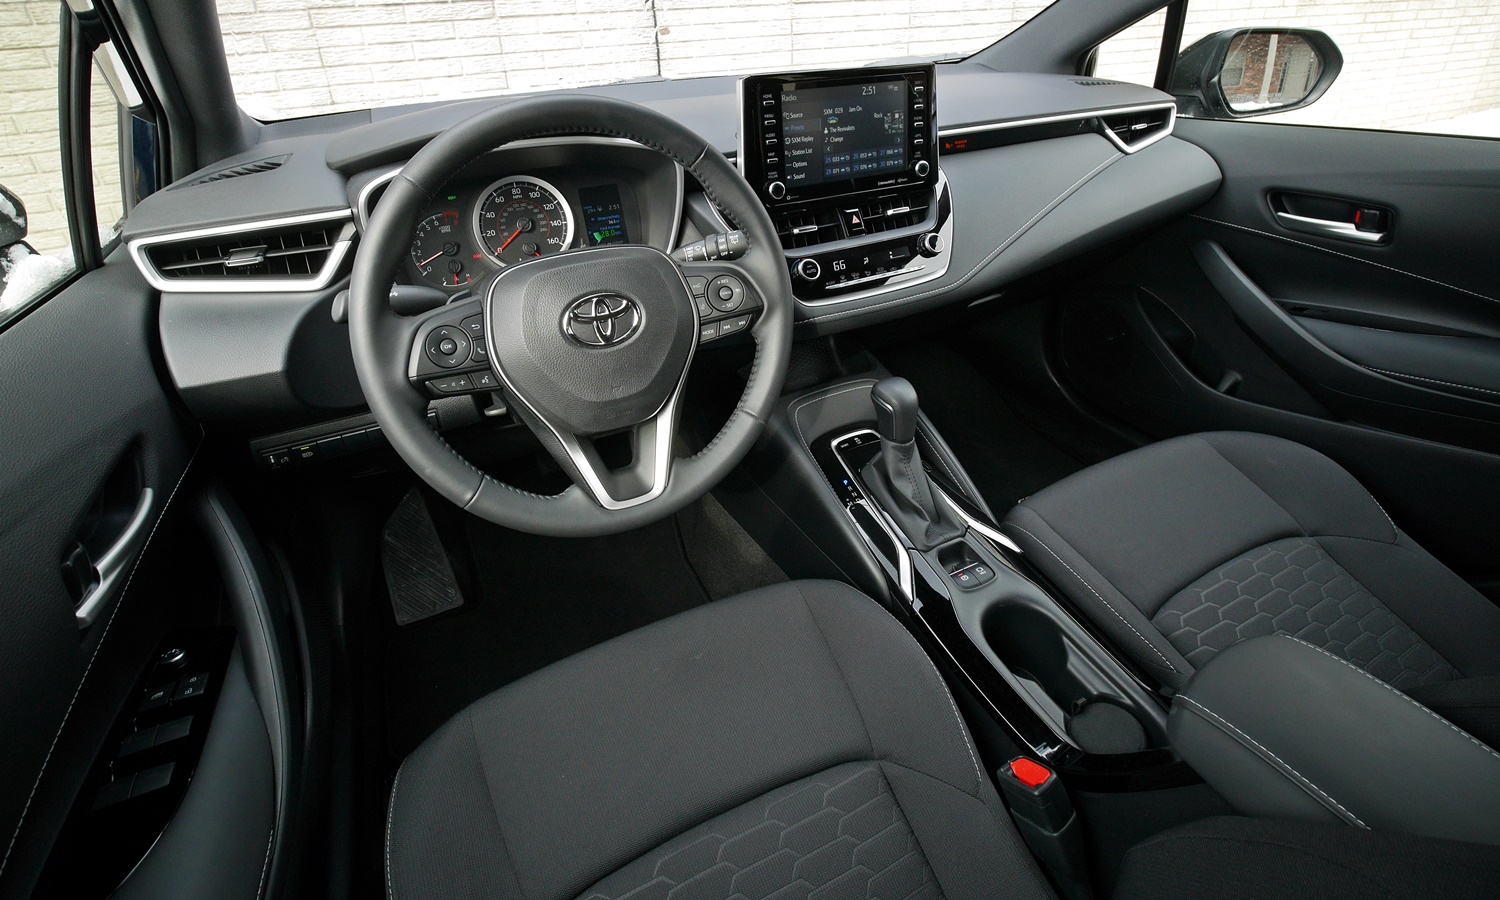 Toyota Corolla Hatchback Photos: Toyota Corolla Hatchback interior